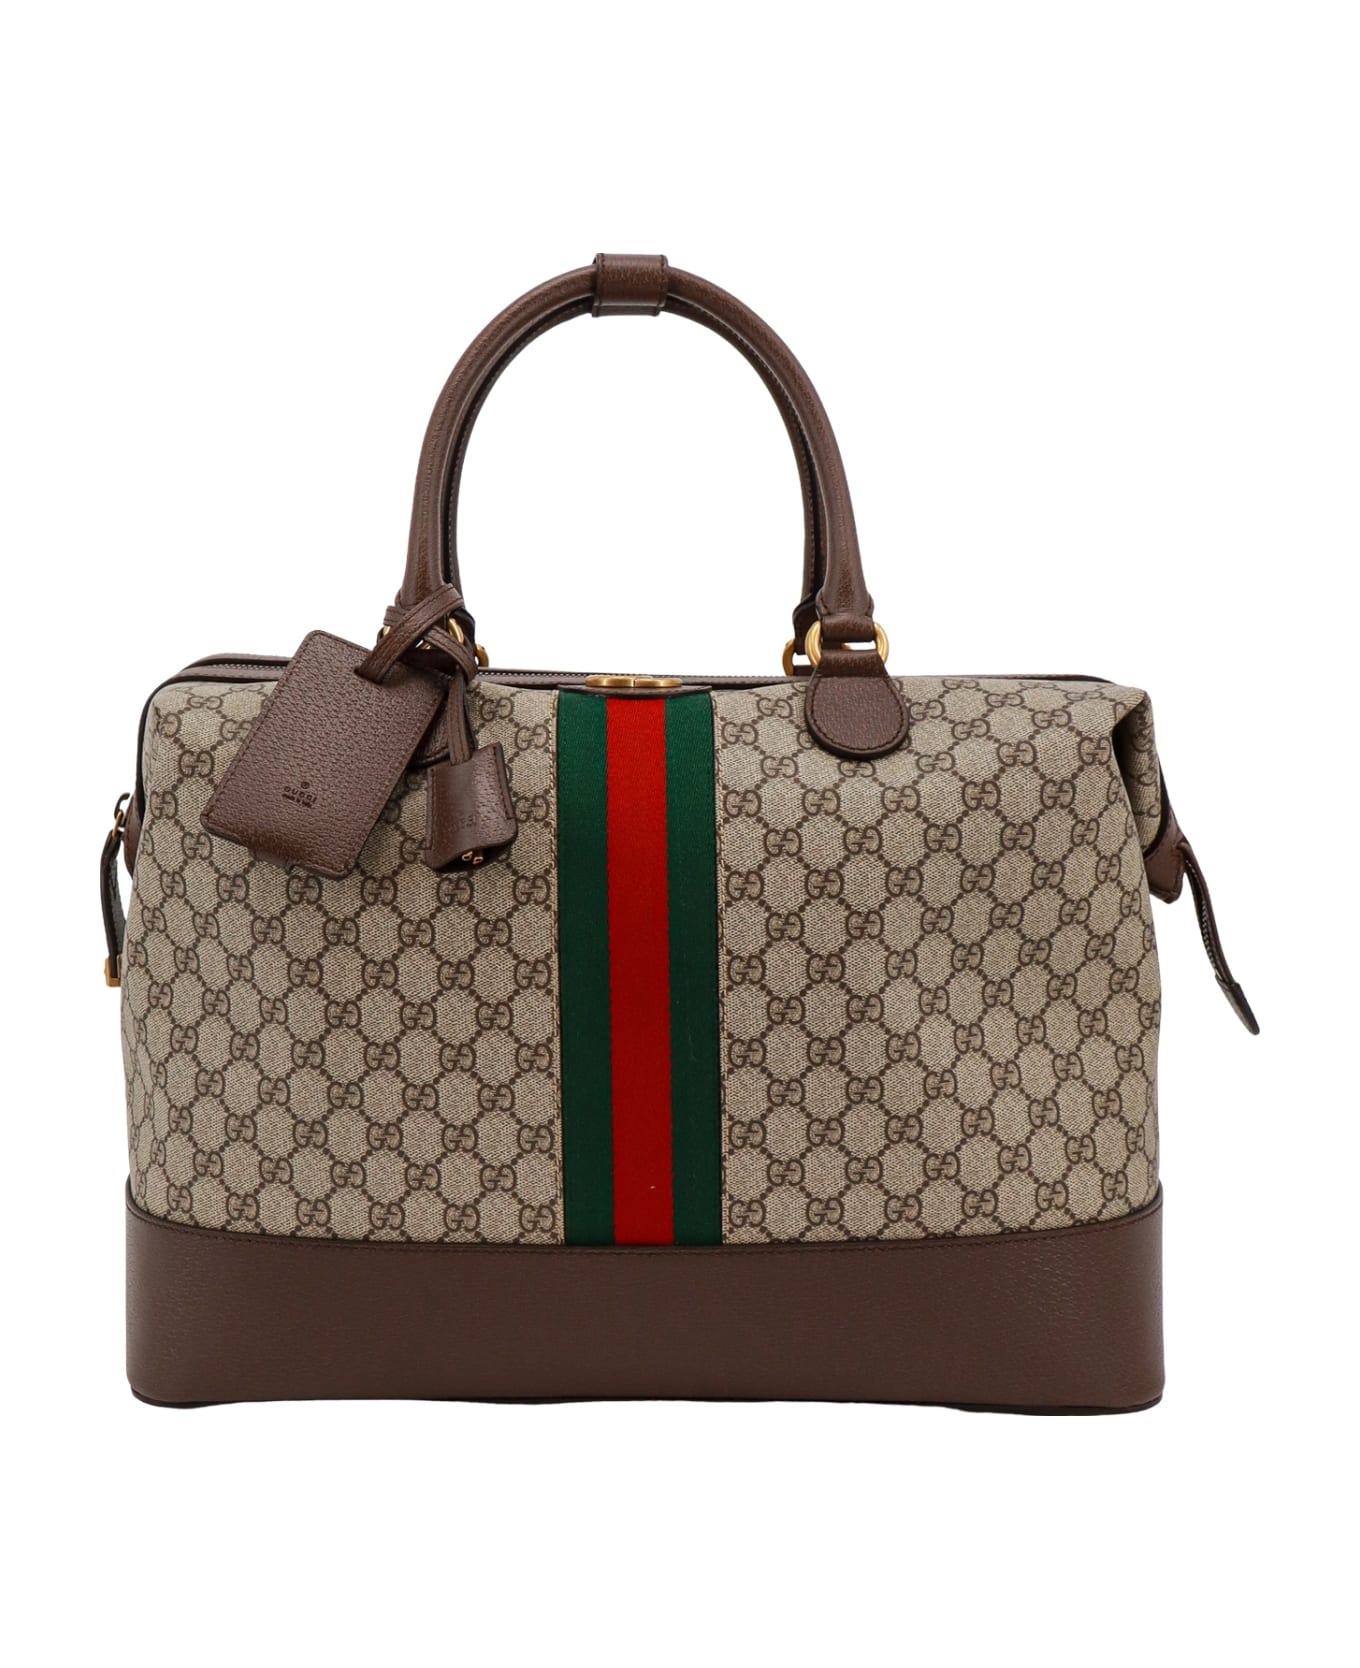 Gucci Savoy Duffle Bag - Beige